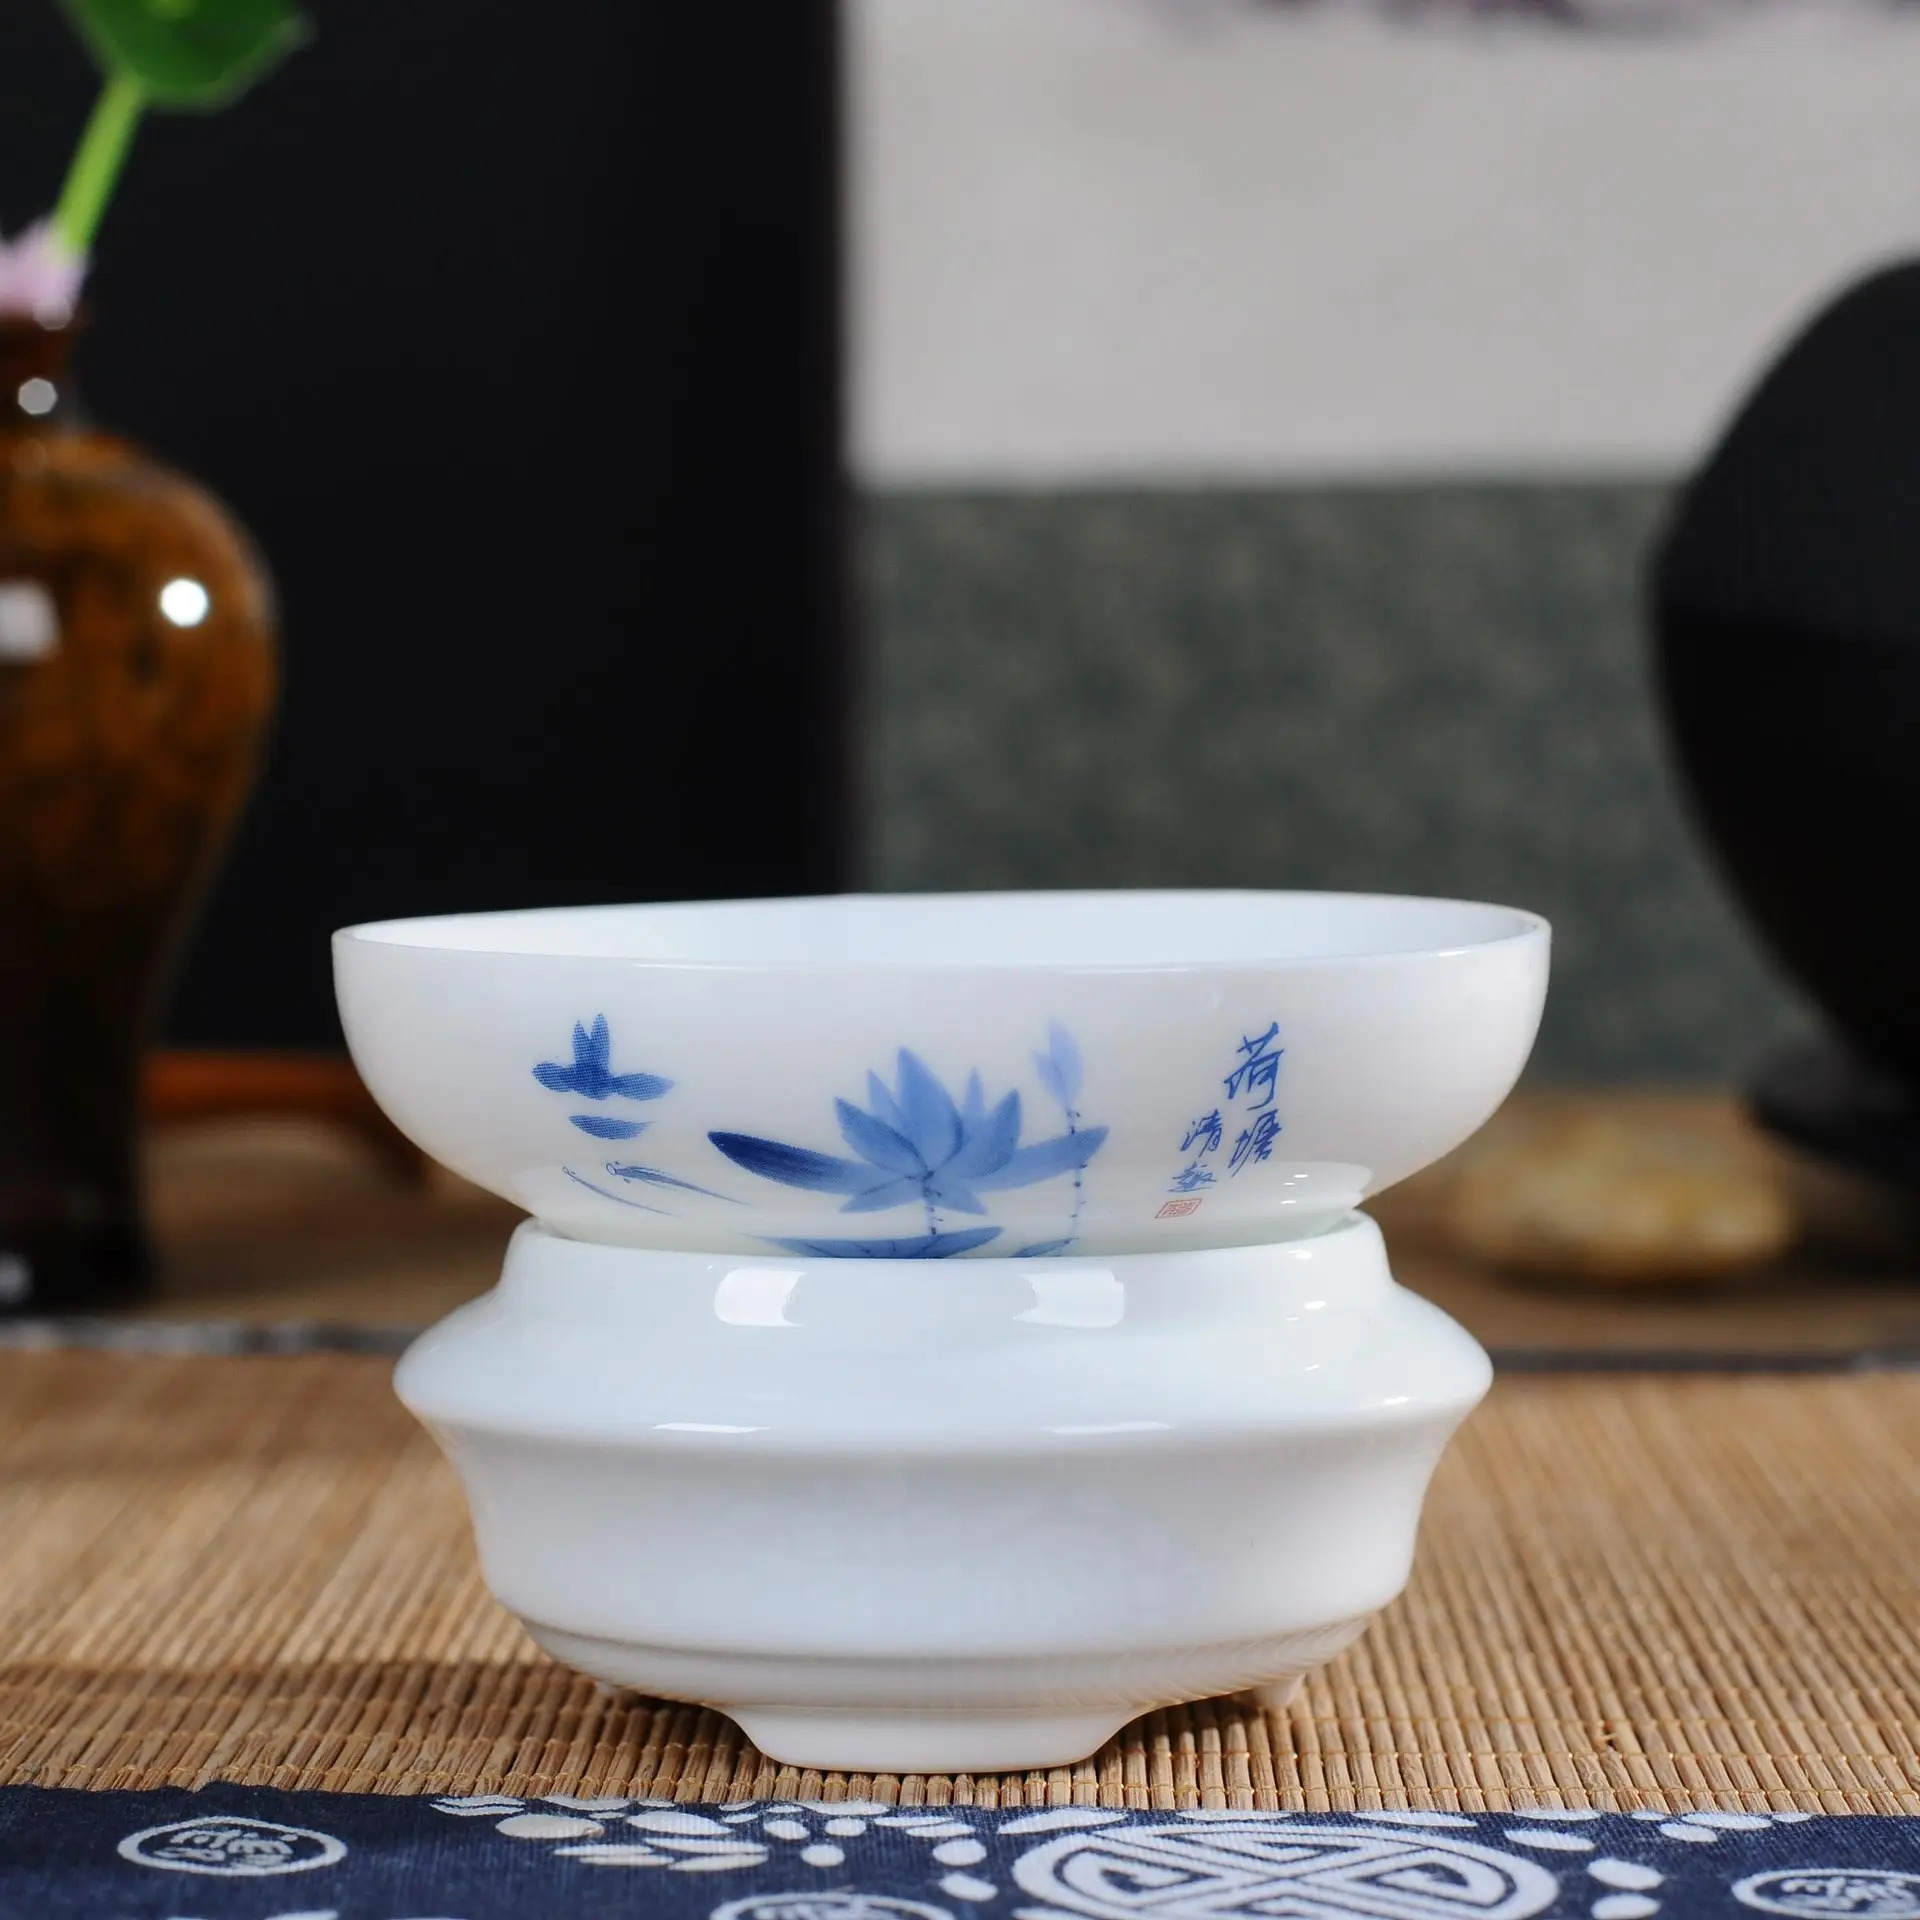 

Porcelain Tea Filter Mesh Infuser ceramic Coffee Herb Spice strainer Diffuser Tea ceremony Tools Accessories